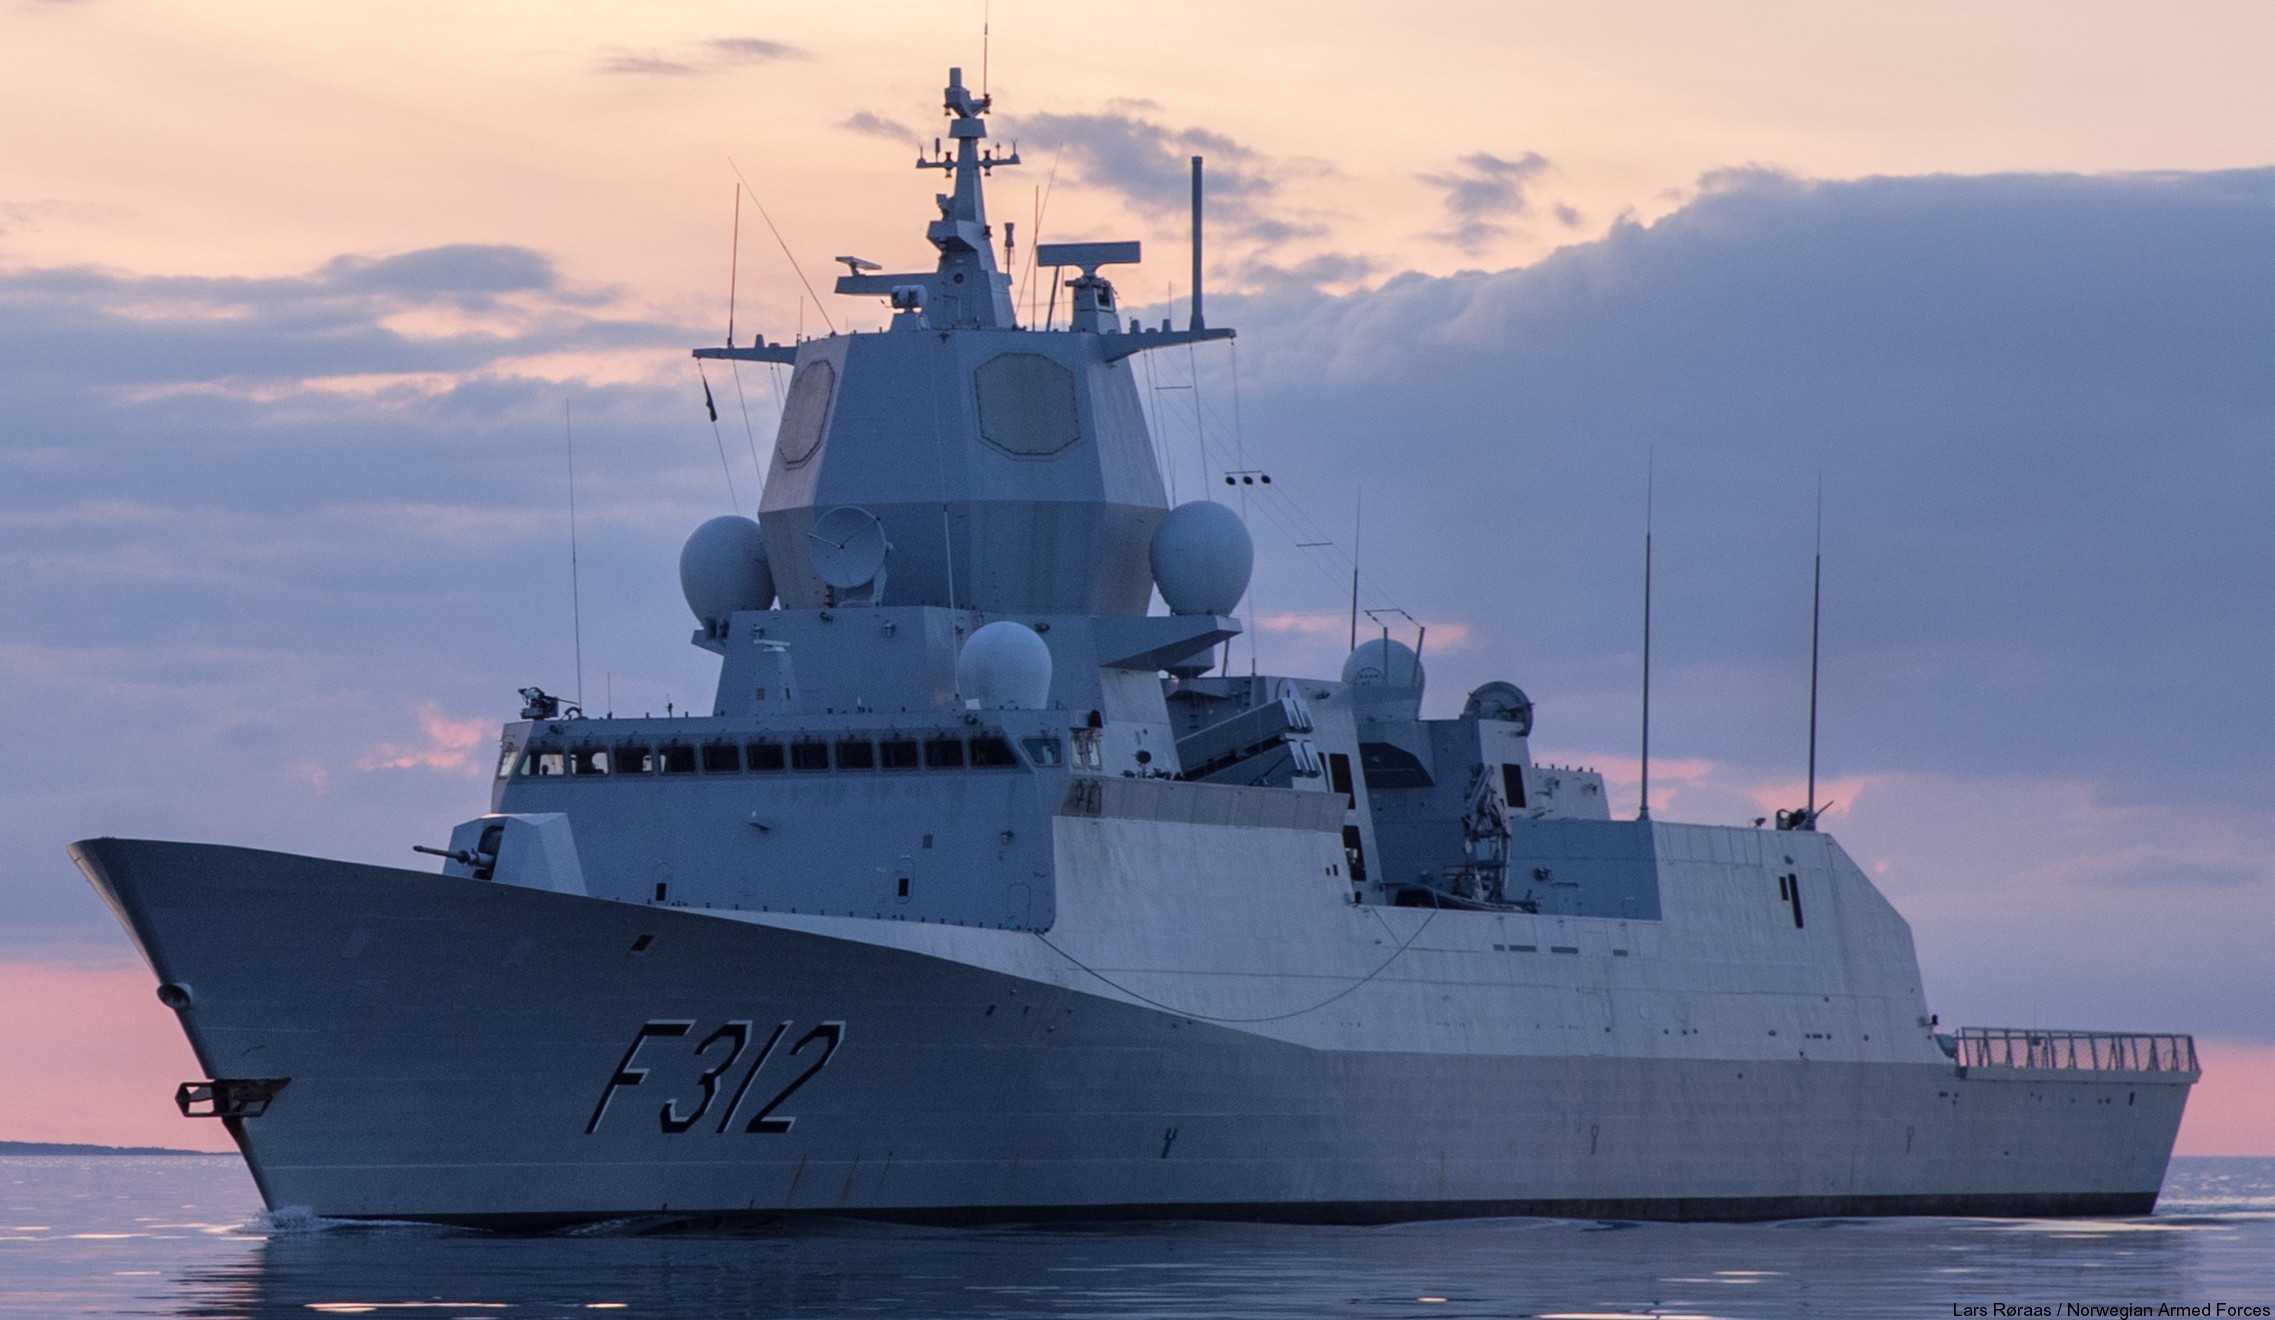 f-312 otto sverdrup hnoms knm fridtjof nansen class frigate royal norwegian navy 12